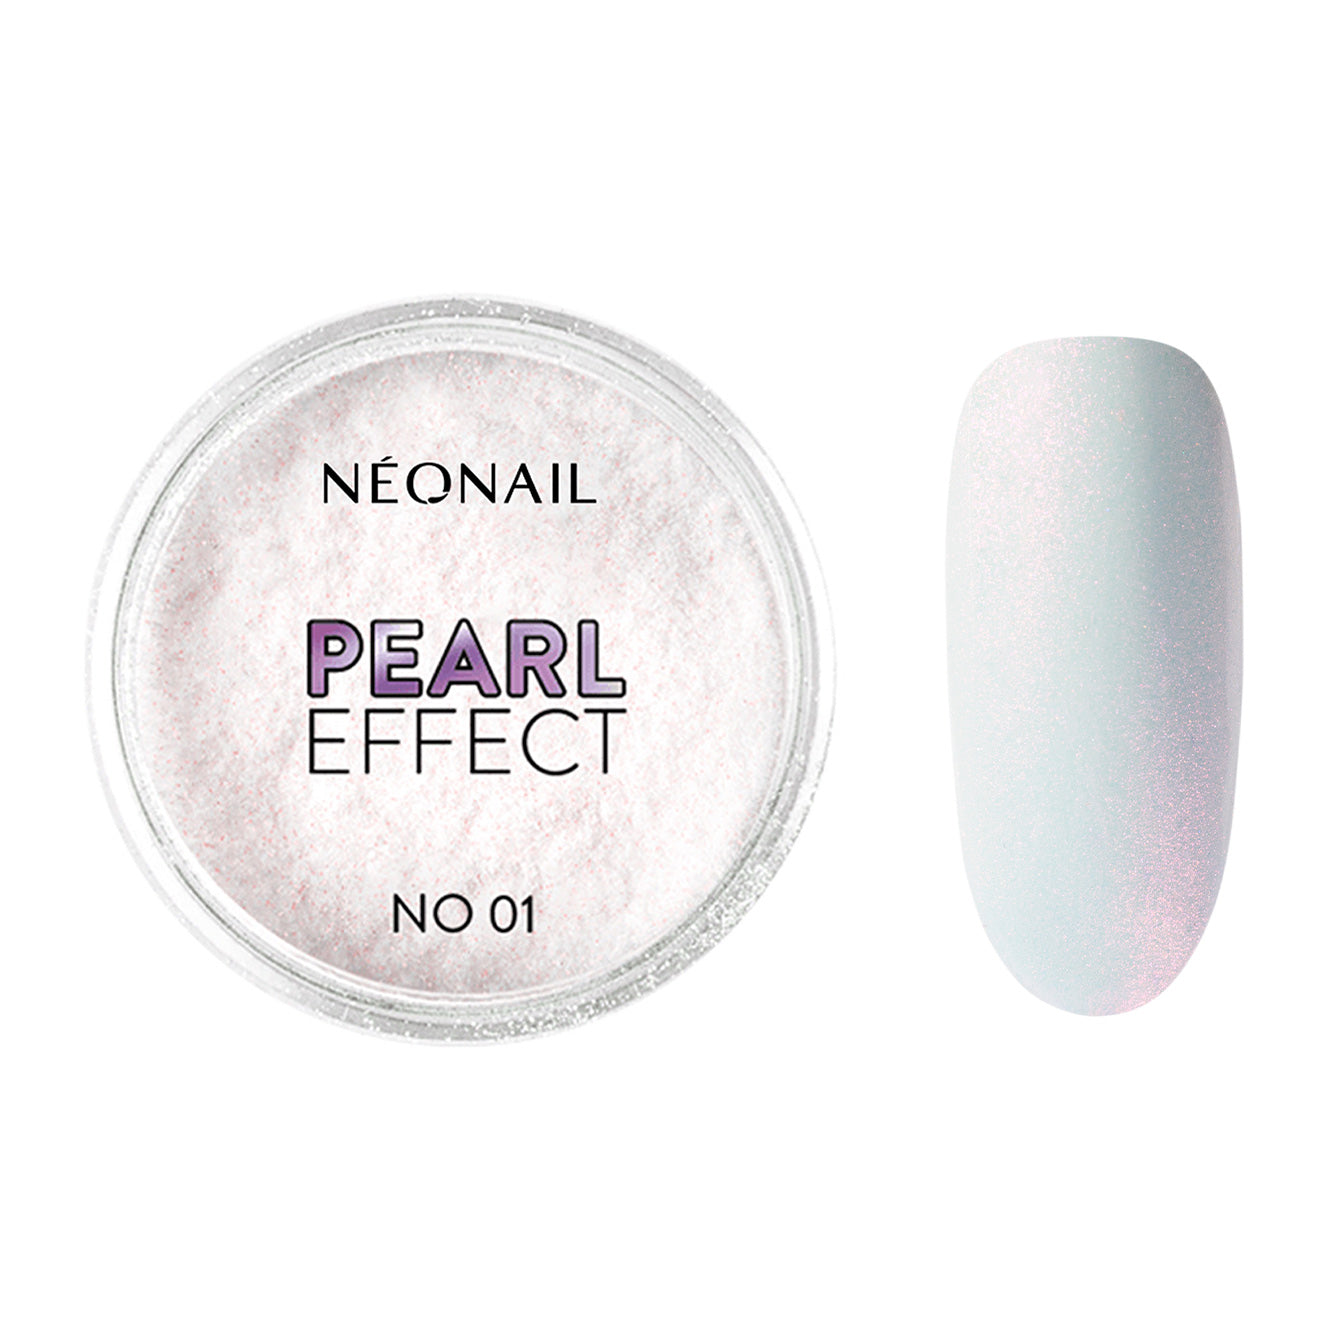 Neglepynt - Glassy Pearl Effect No 1 - 2g-Neglepynt-NeoNail-NR Kosmetik